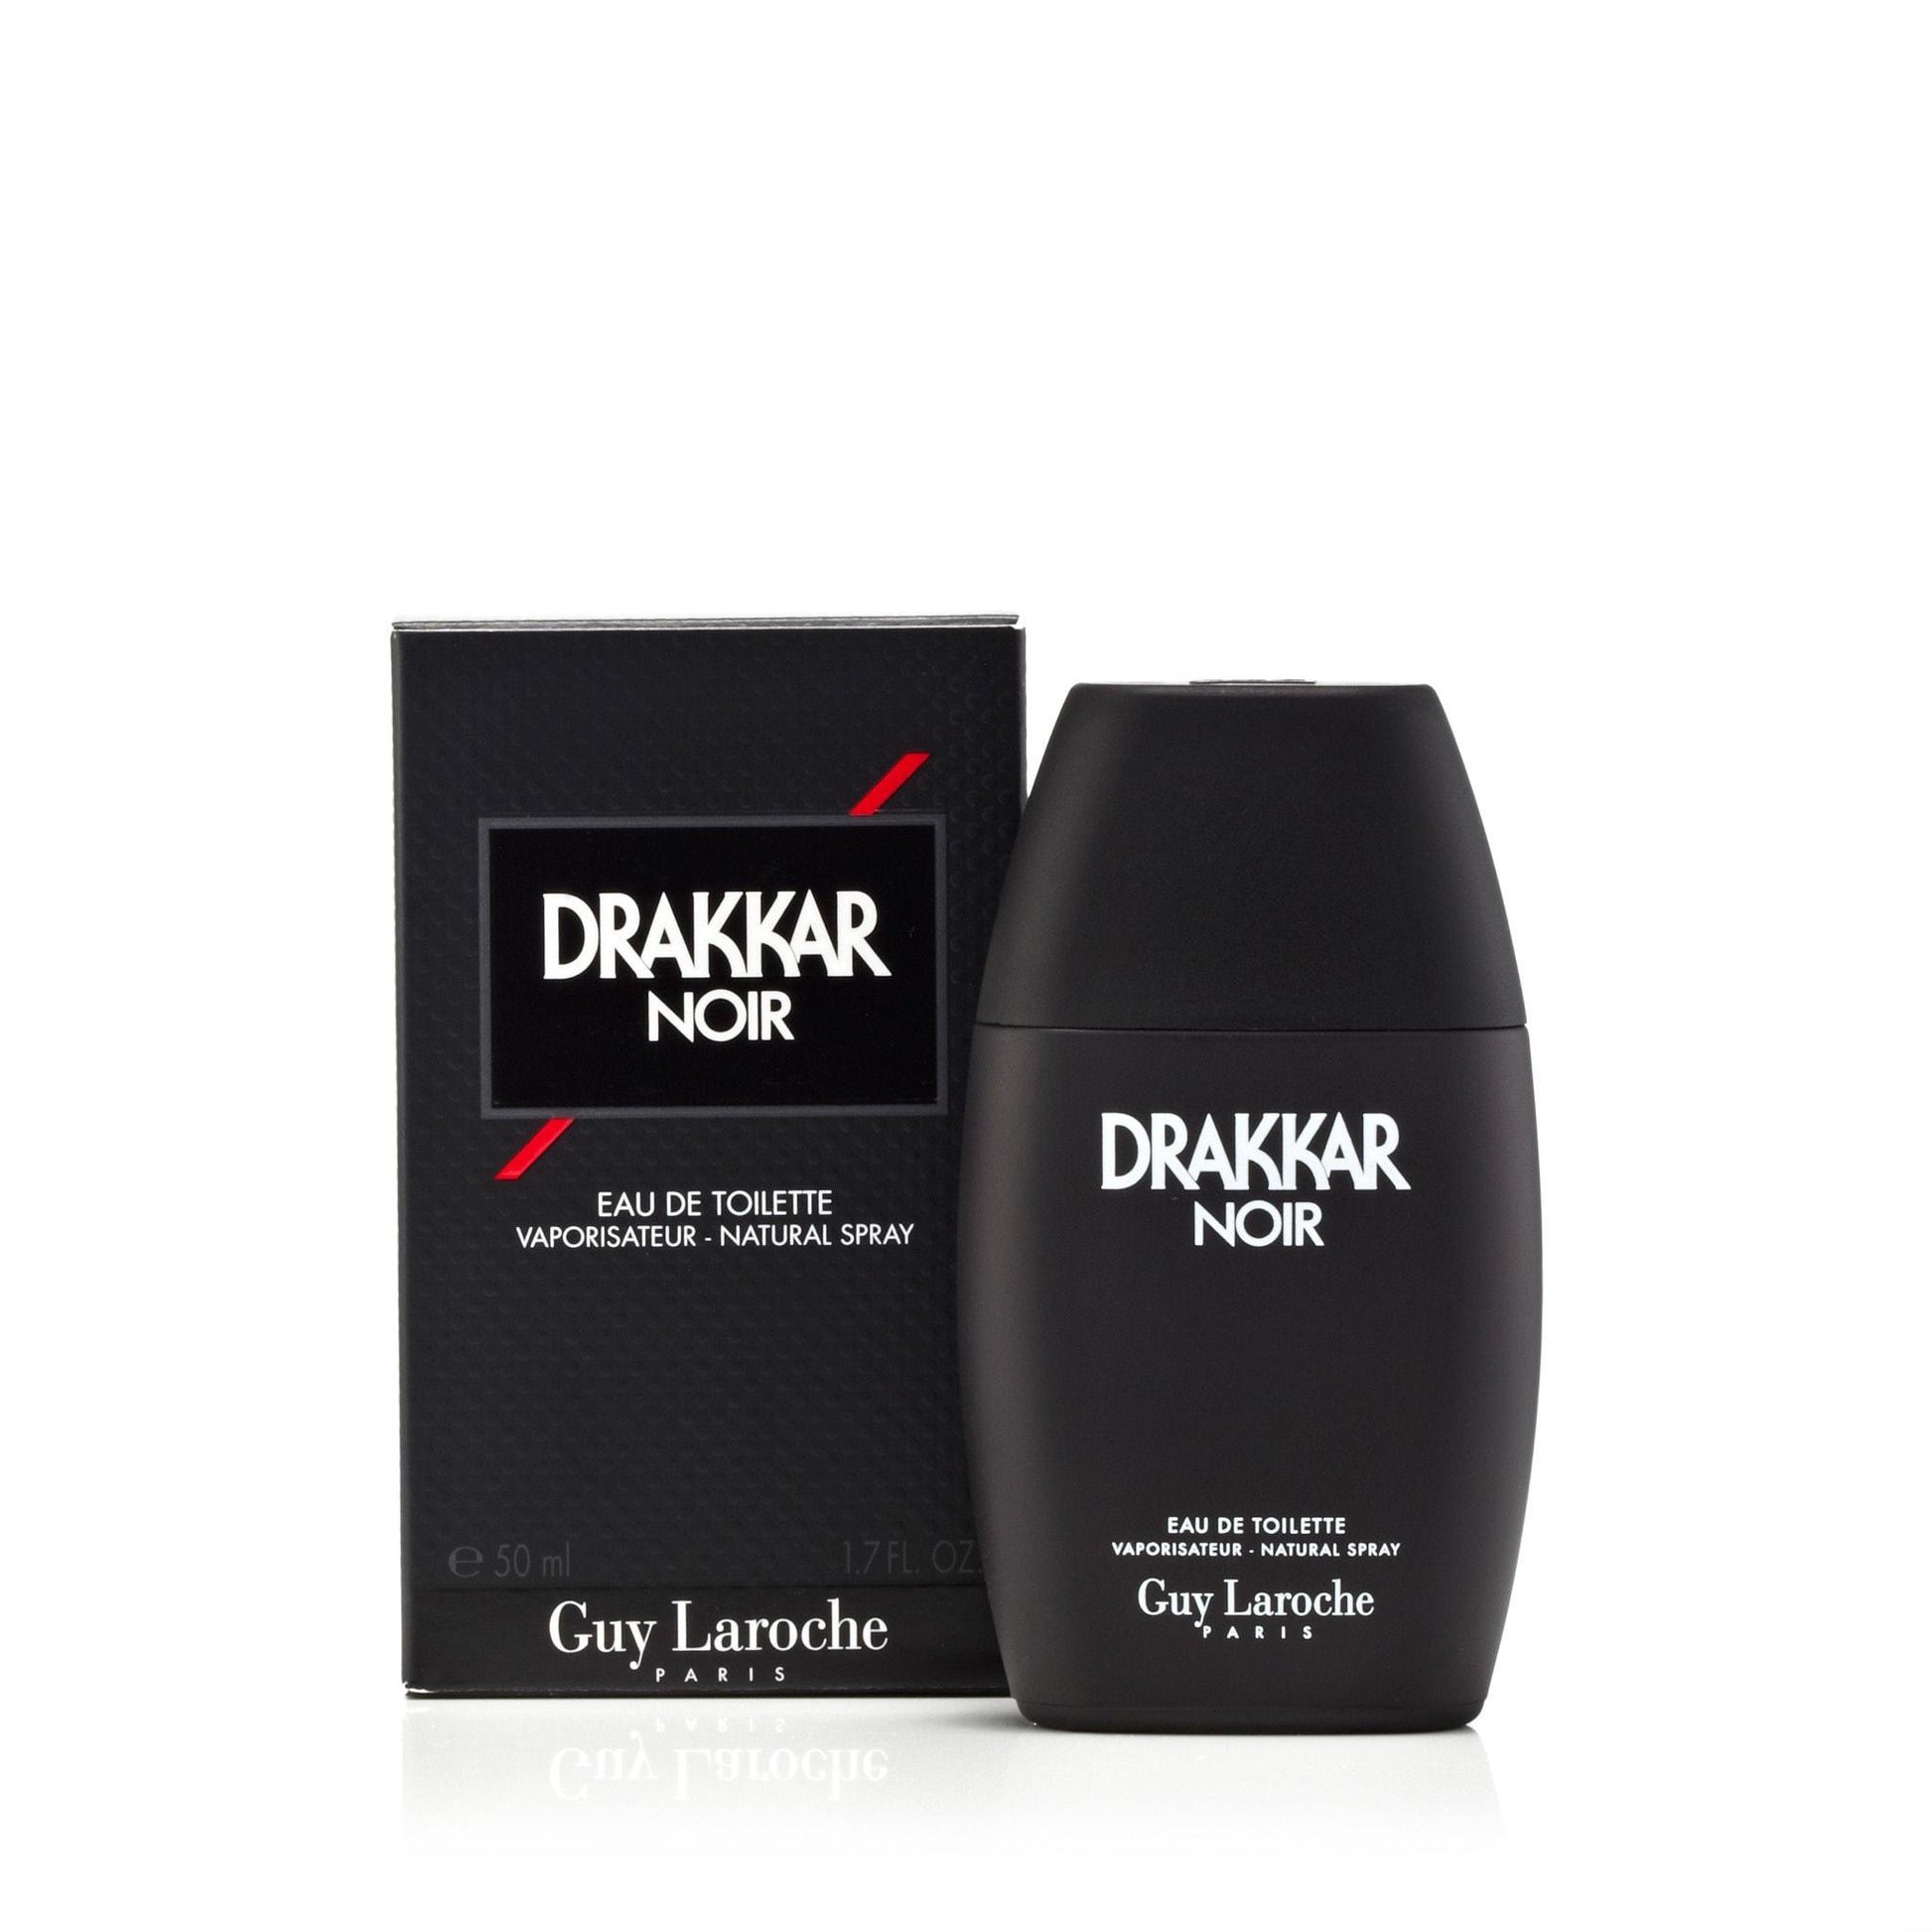 Drakkar Noir Eau de Toilette Spray for Men by Guy Laroche, Product image 6